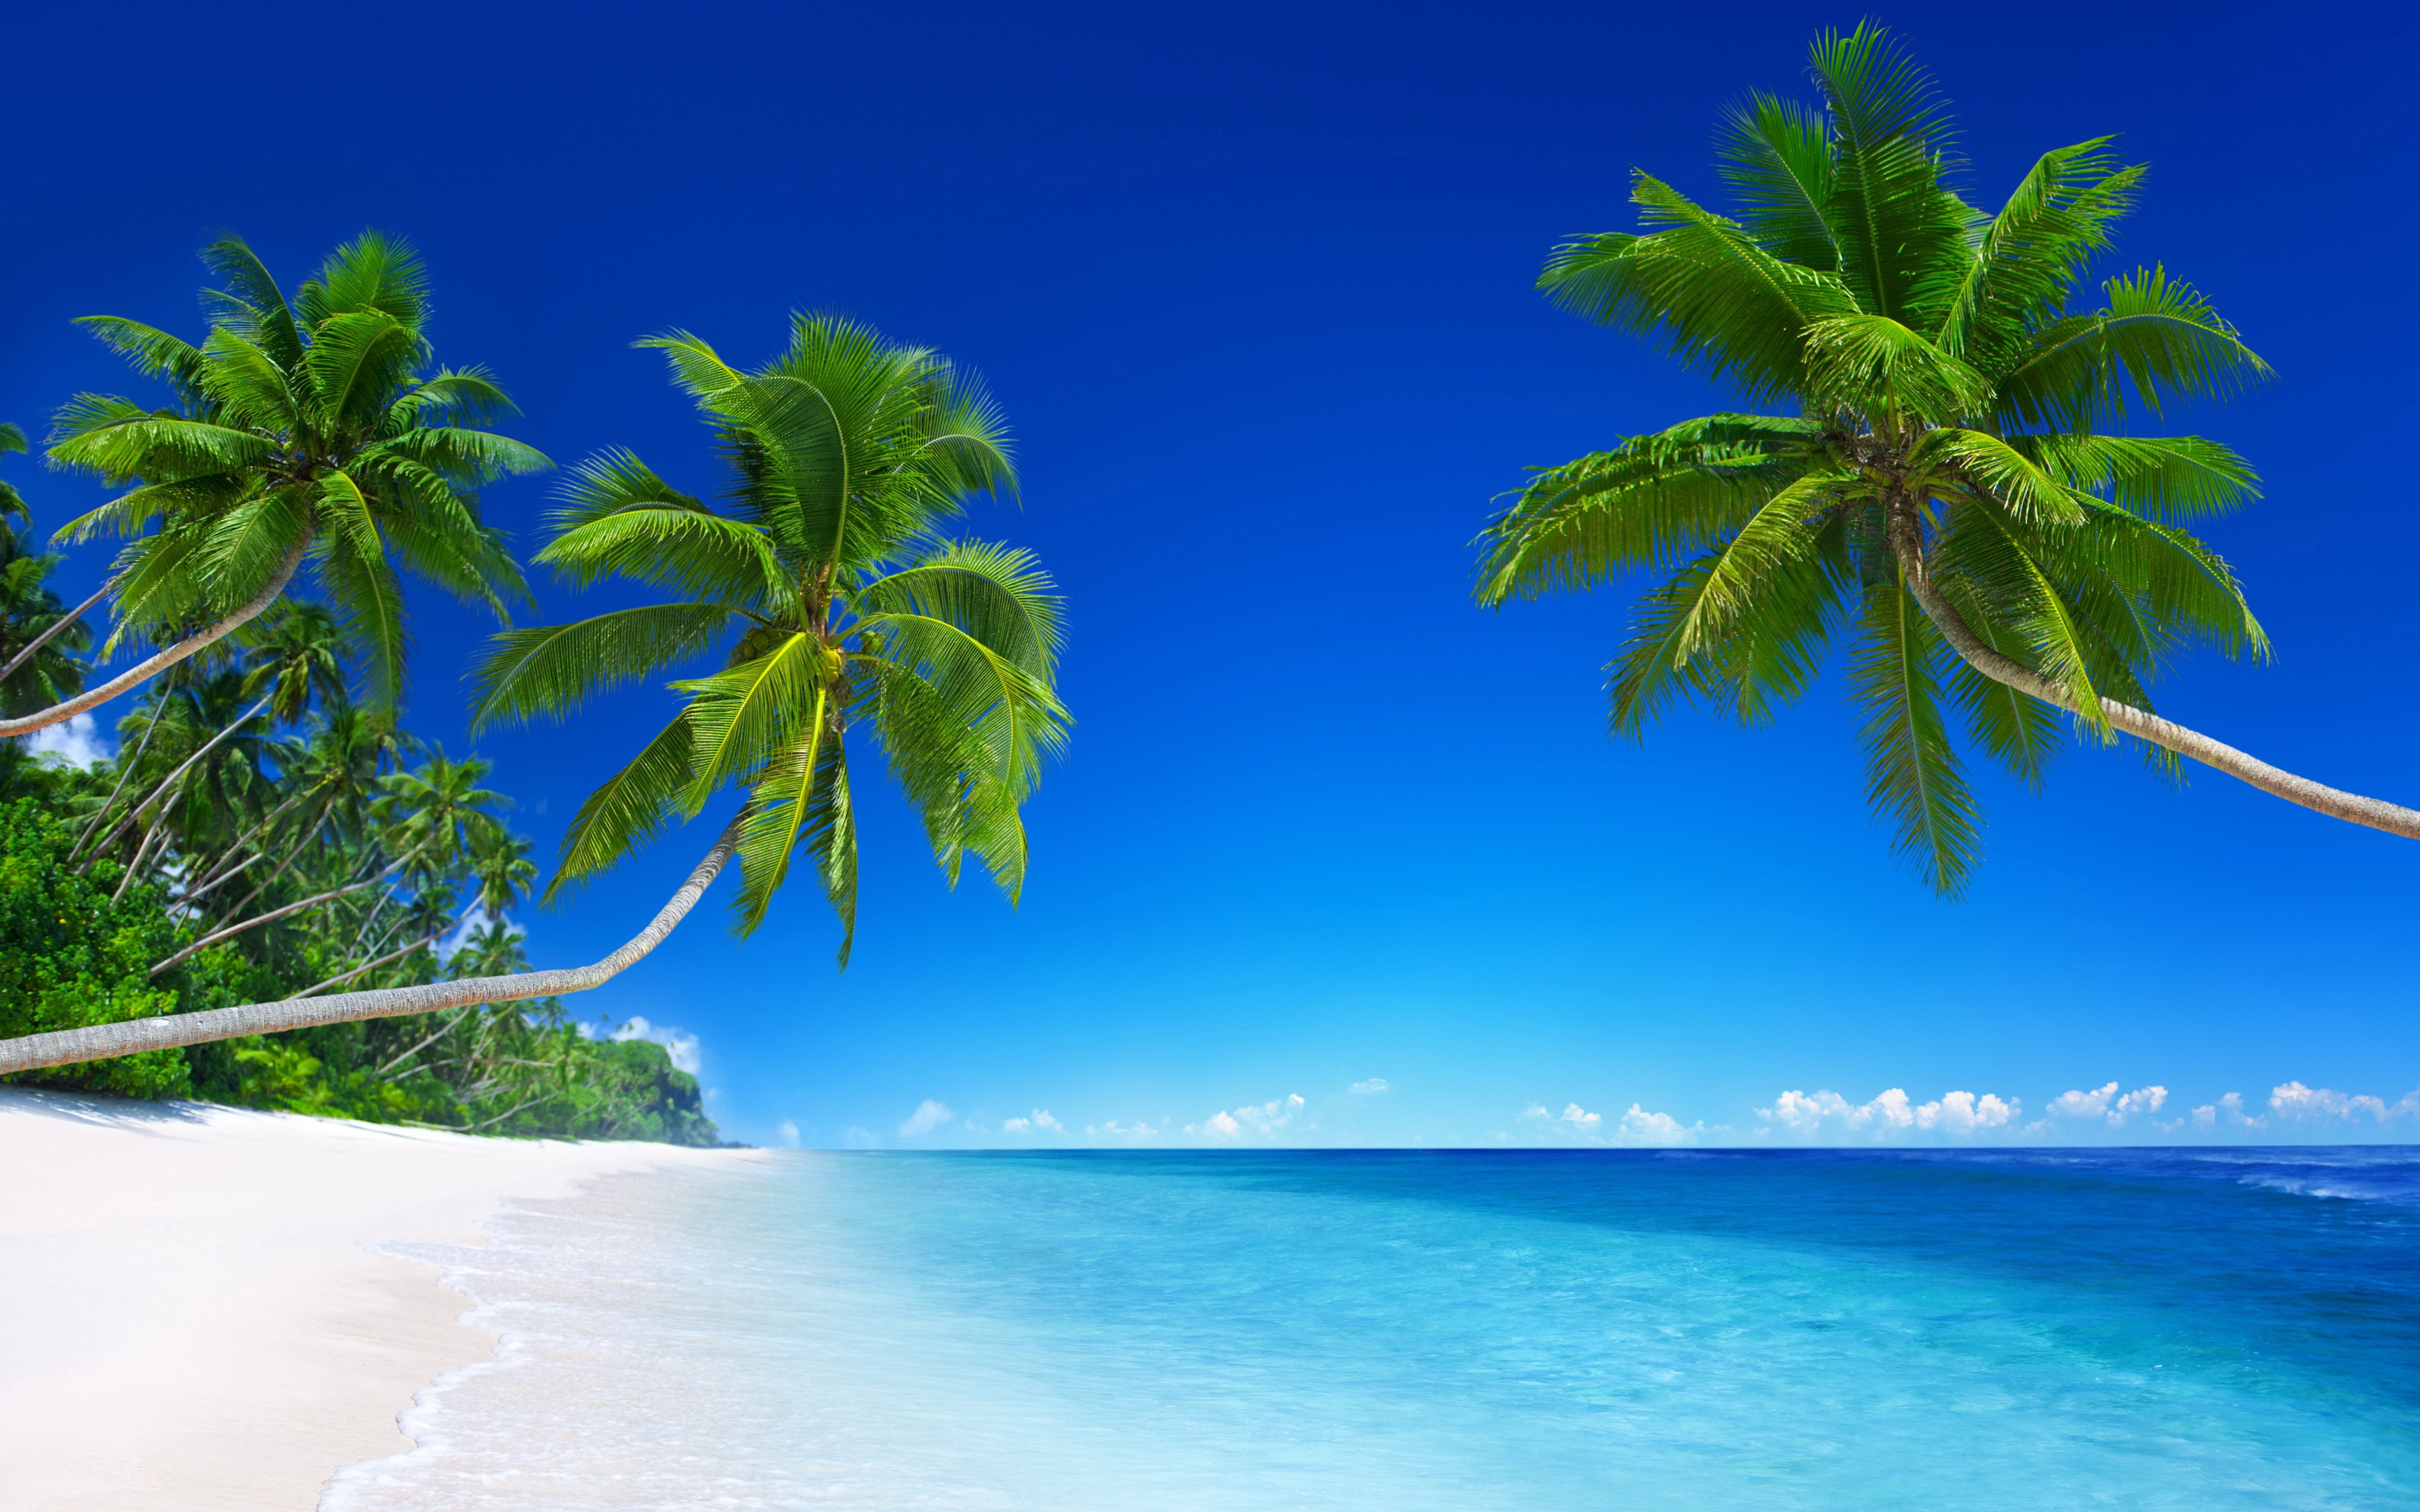 HD Beach Desktop Wallpapers   Top Free HD Beach Desktop